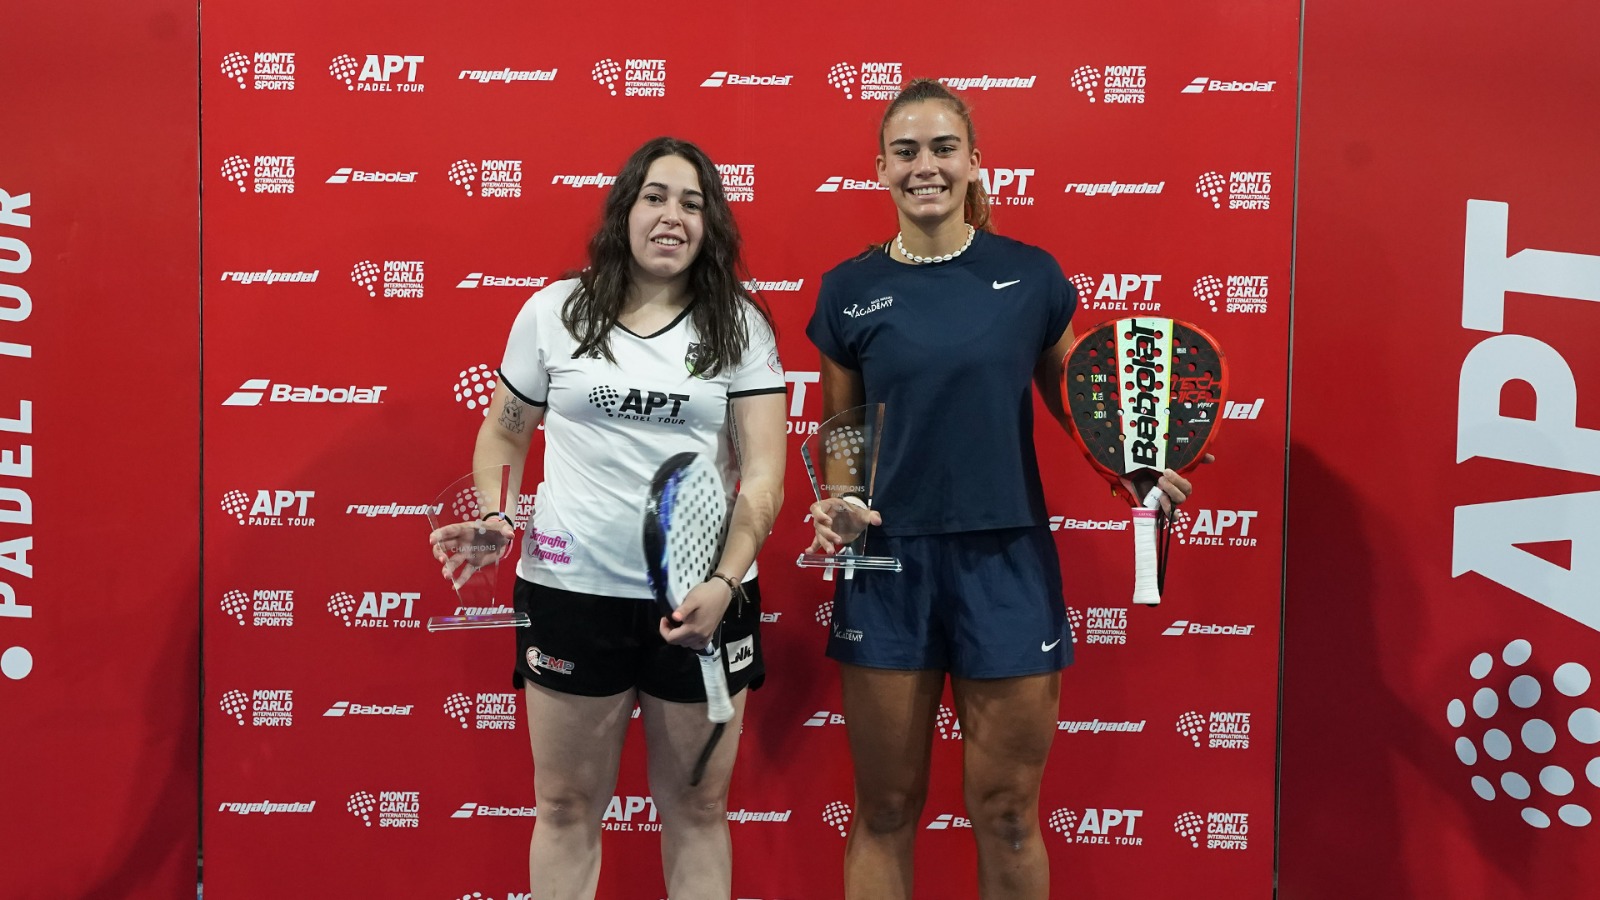 Carrascosa och Martínez final Oeiras // Källa: APT Padel Tour